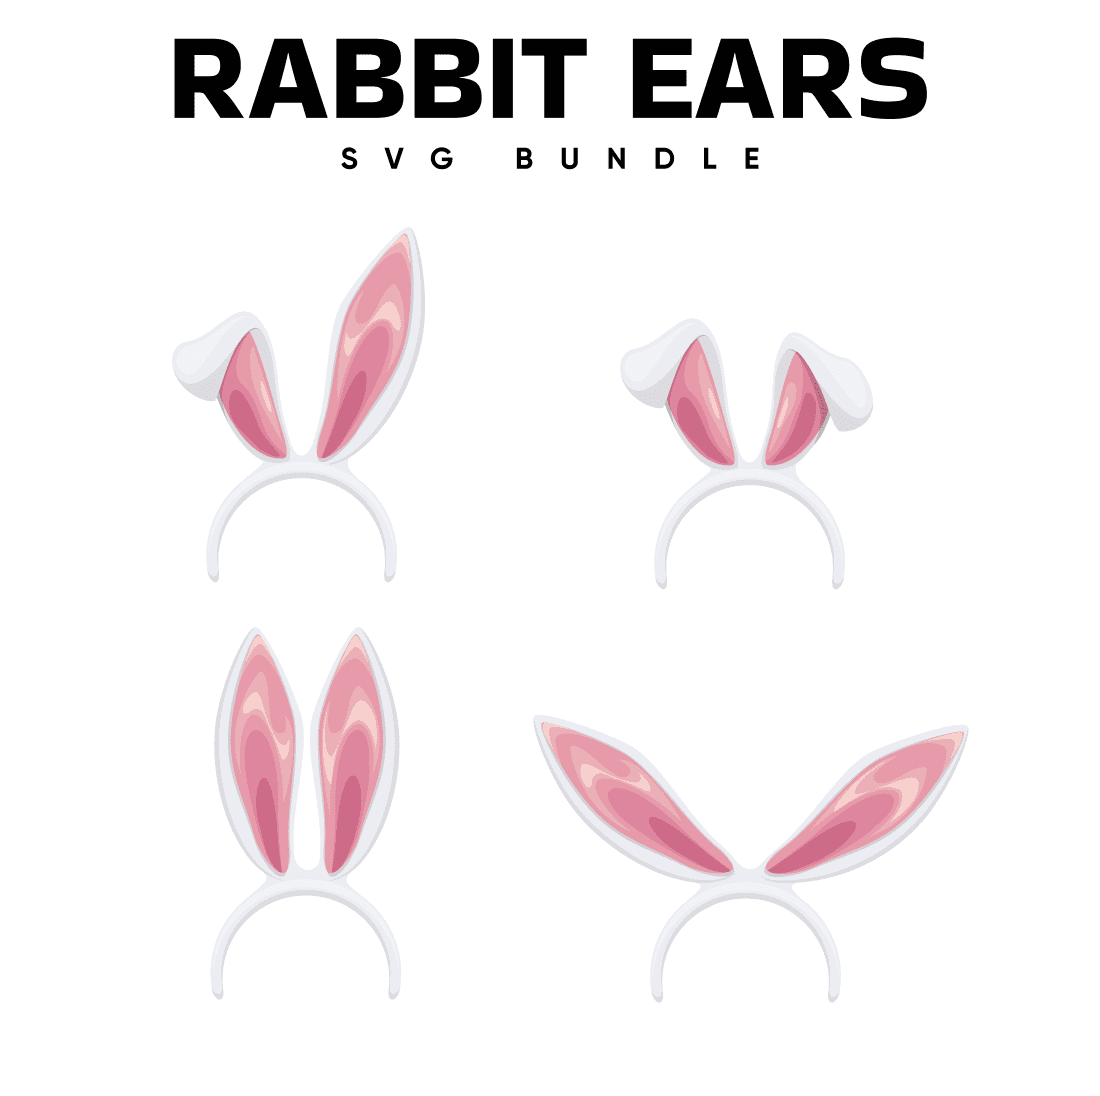 Rabbit ears svg bundle.